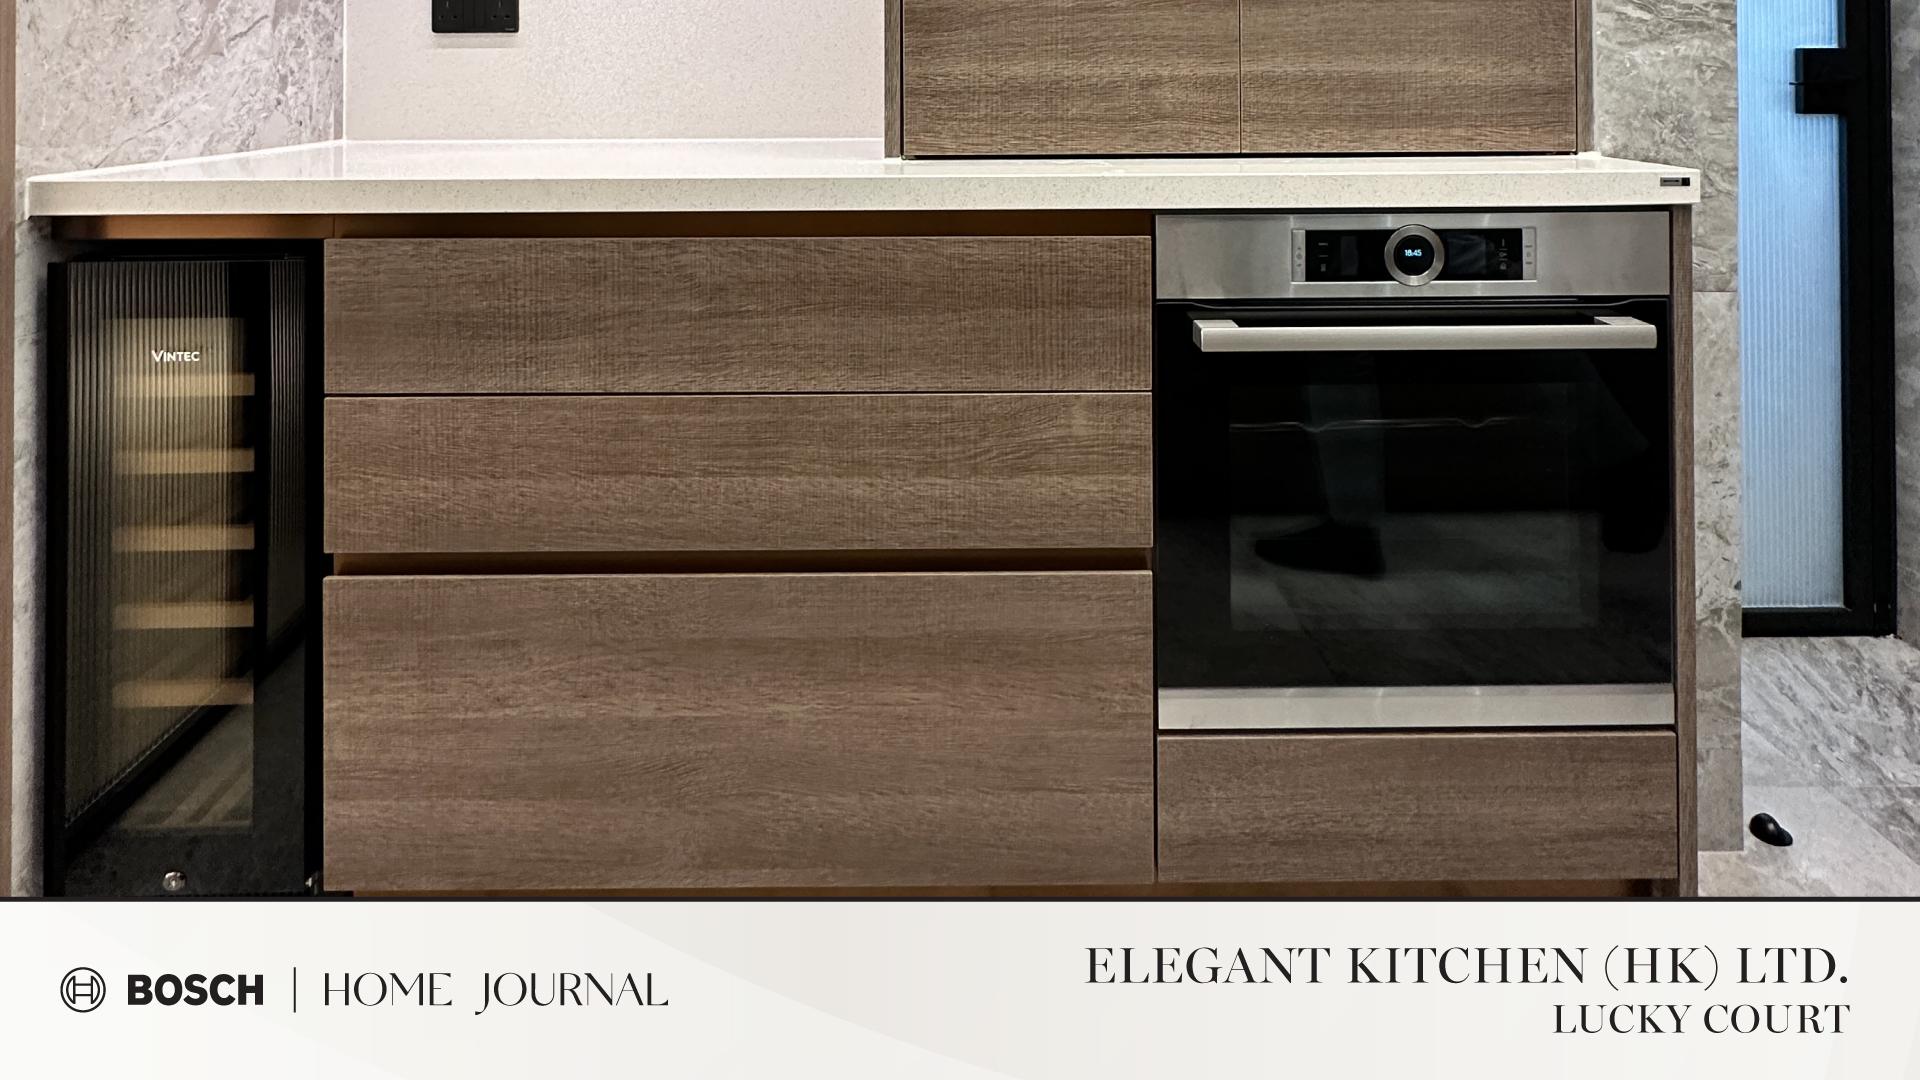 Bosch X Home Journal廚房設計大奬得奬名單揭曉